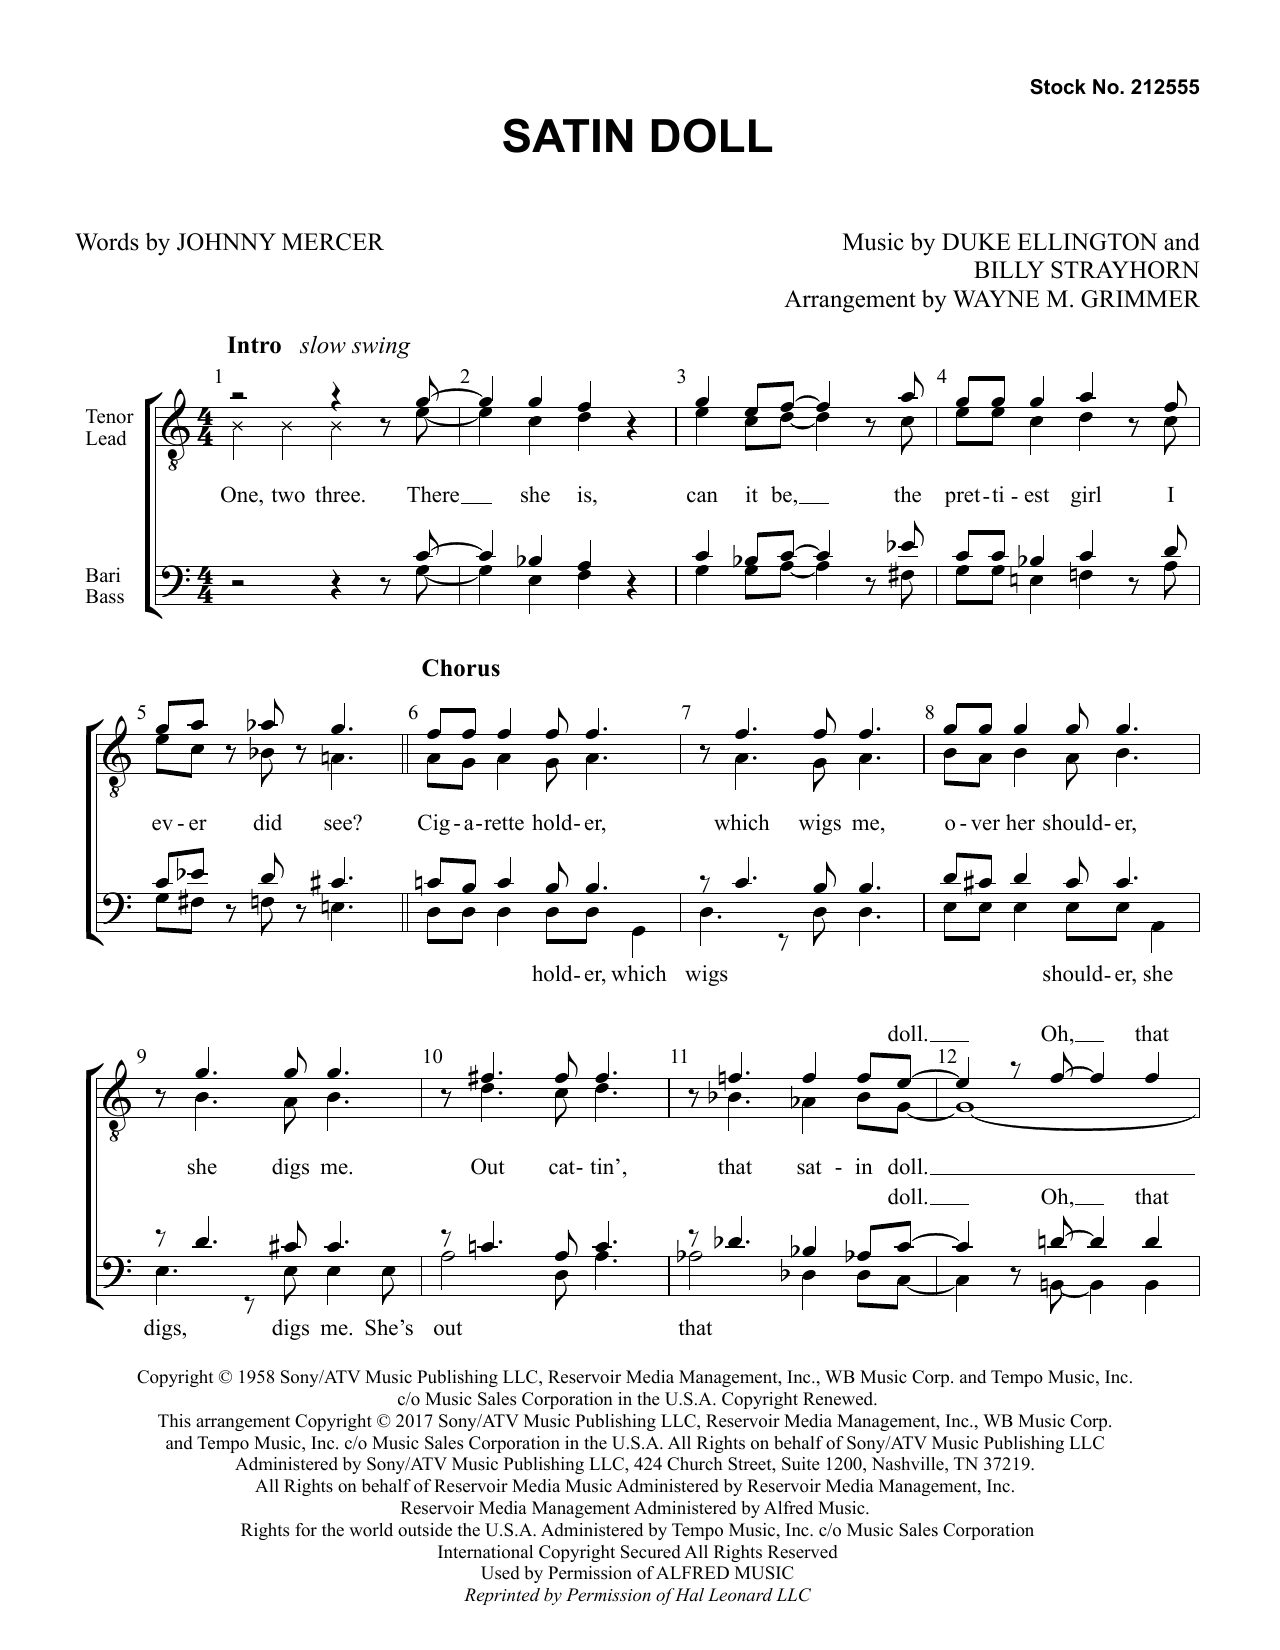 Johnny Mercer Satin Doll (arr. Wayne Grimmer) sheet music notes and chords arranged for TTBB Choir